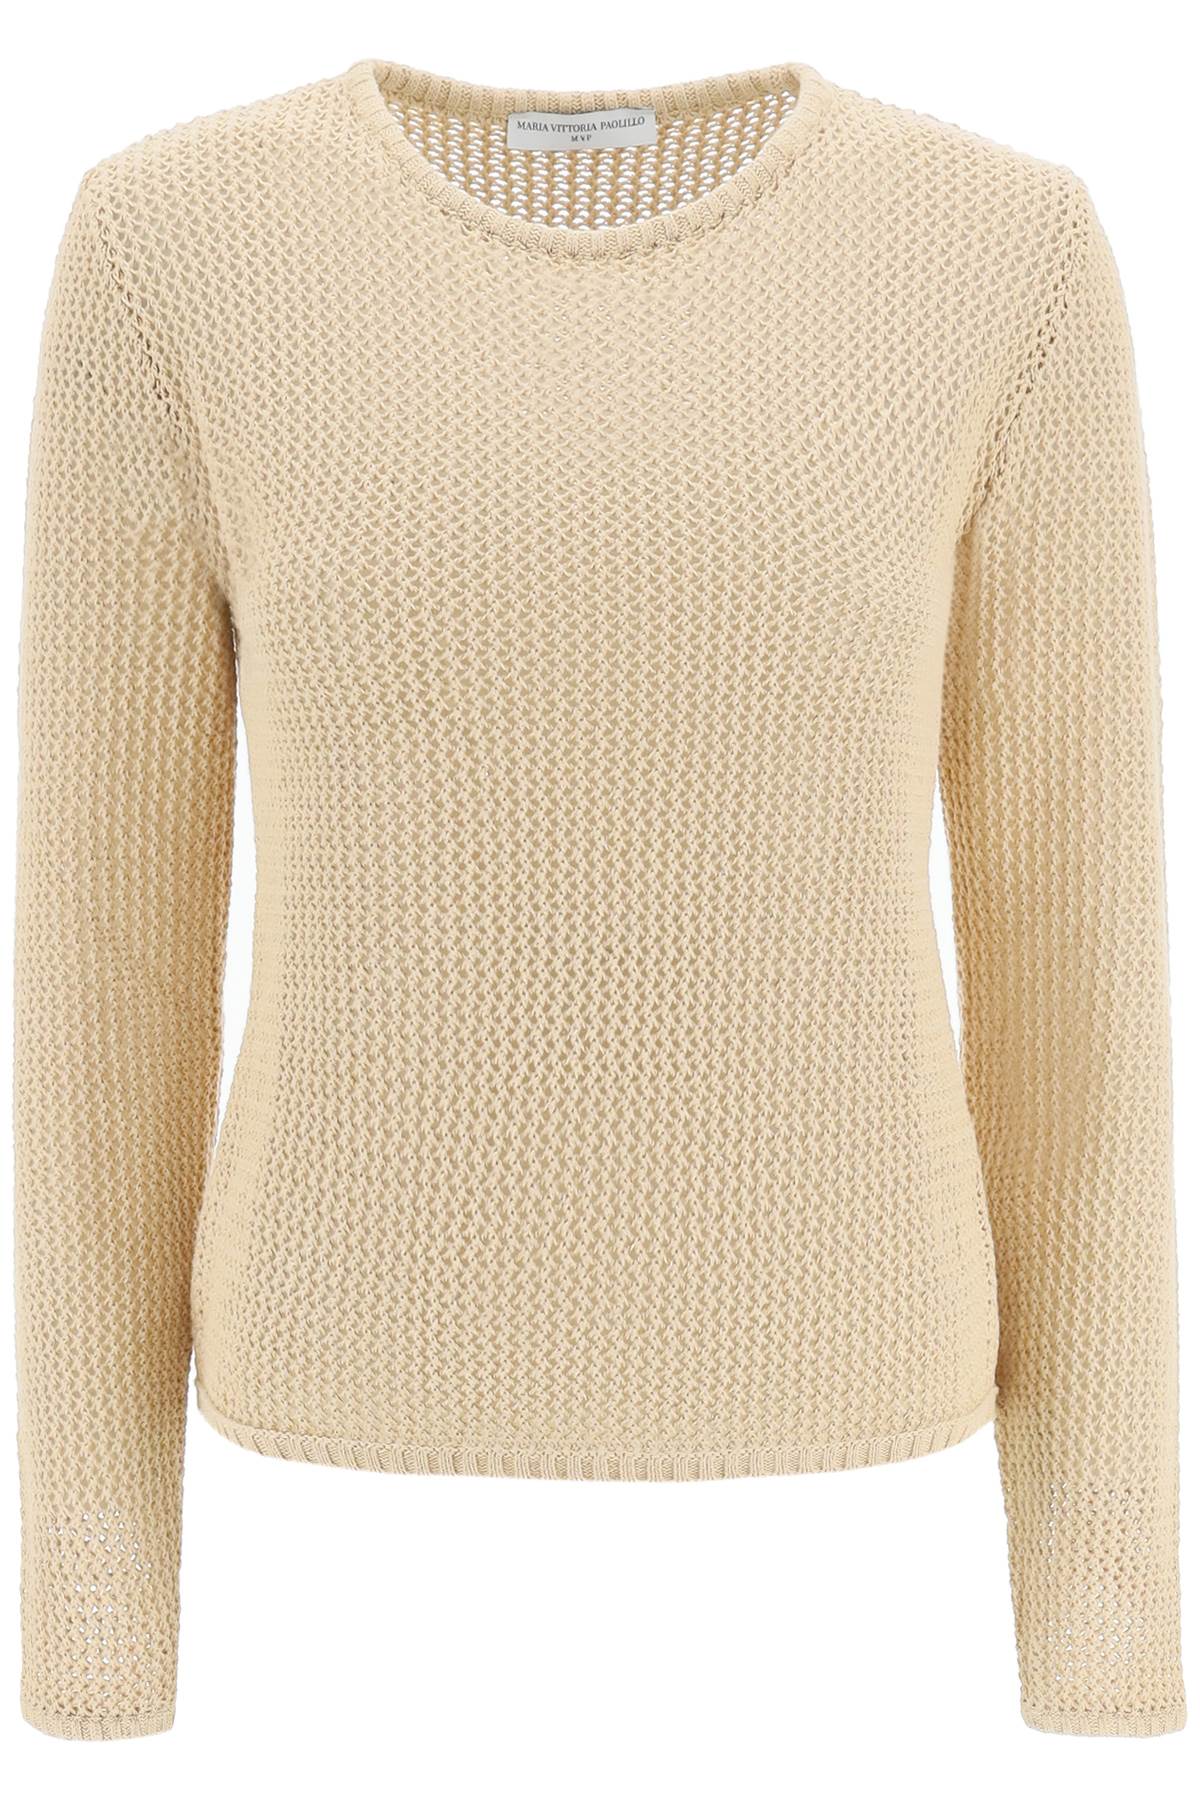 Mvp wardrobe 'cambria' openwork sweater-0